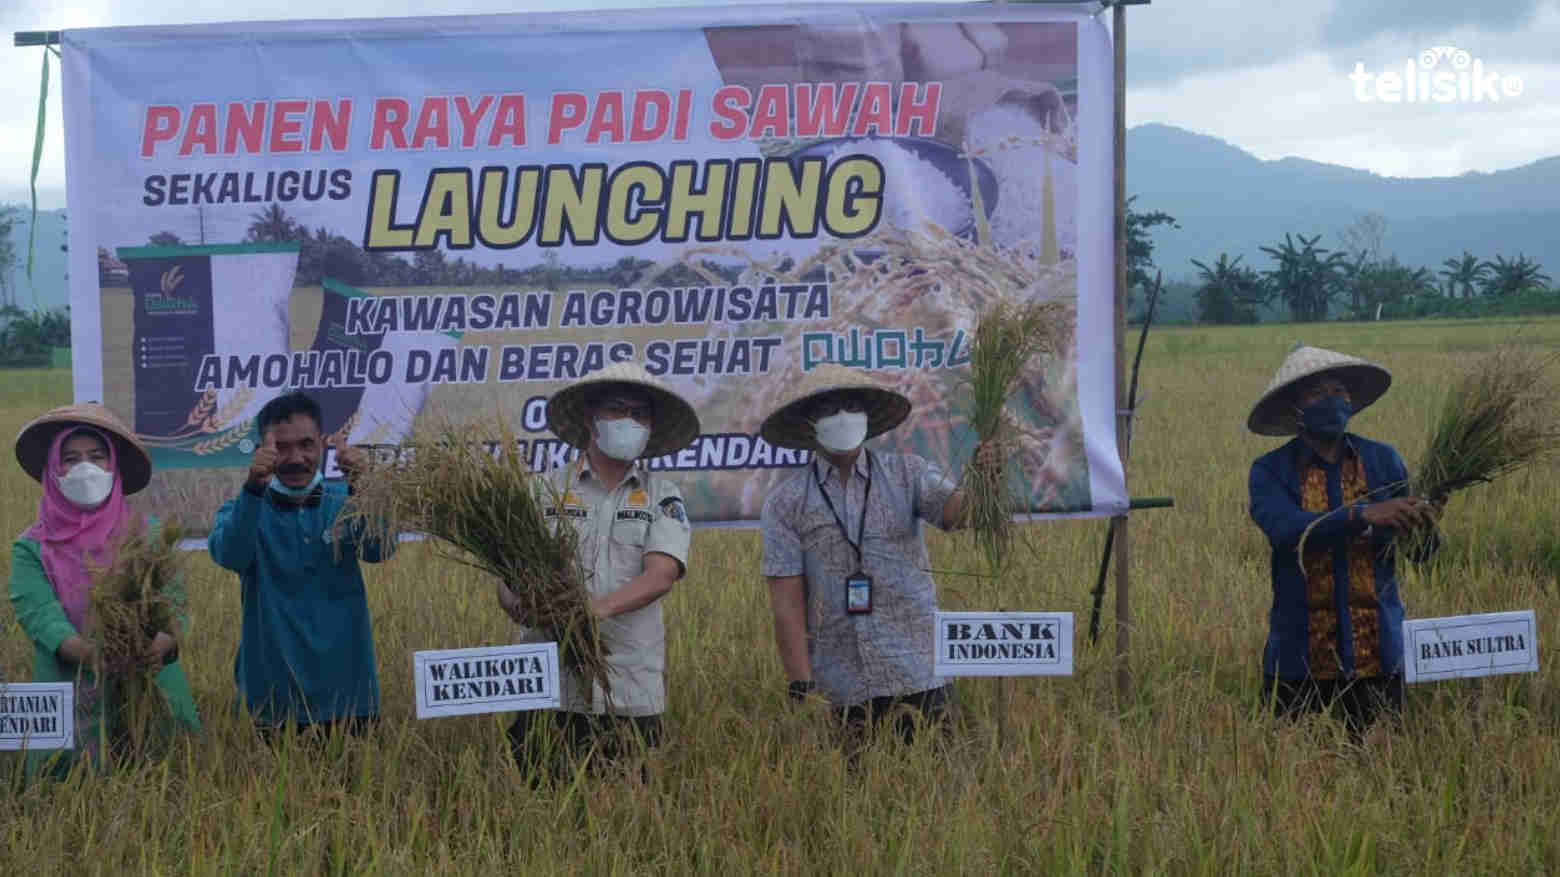 Wali Kota Kendari Panen Raya dan Launching Beras Organik Owoha